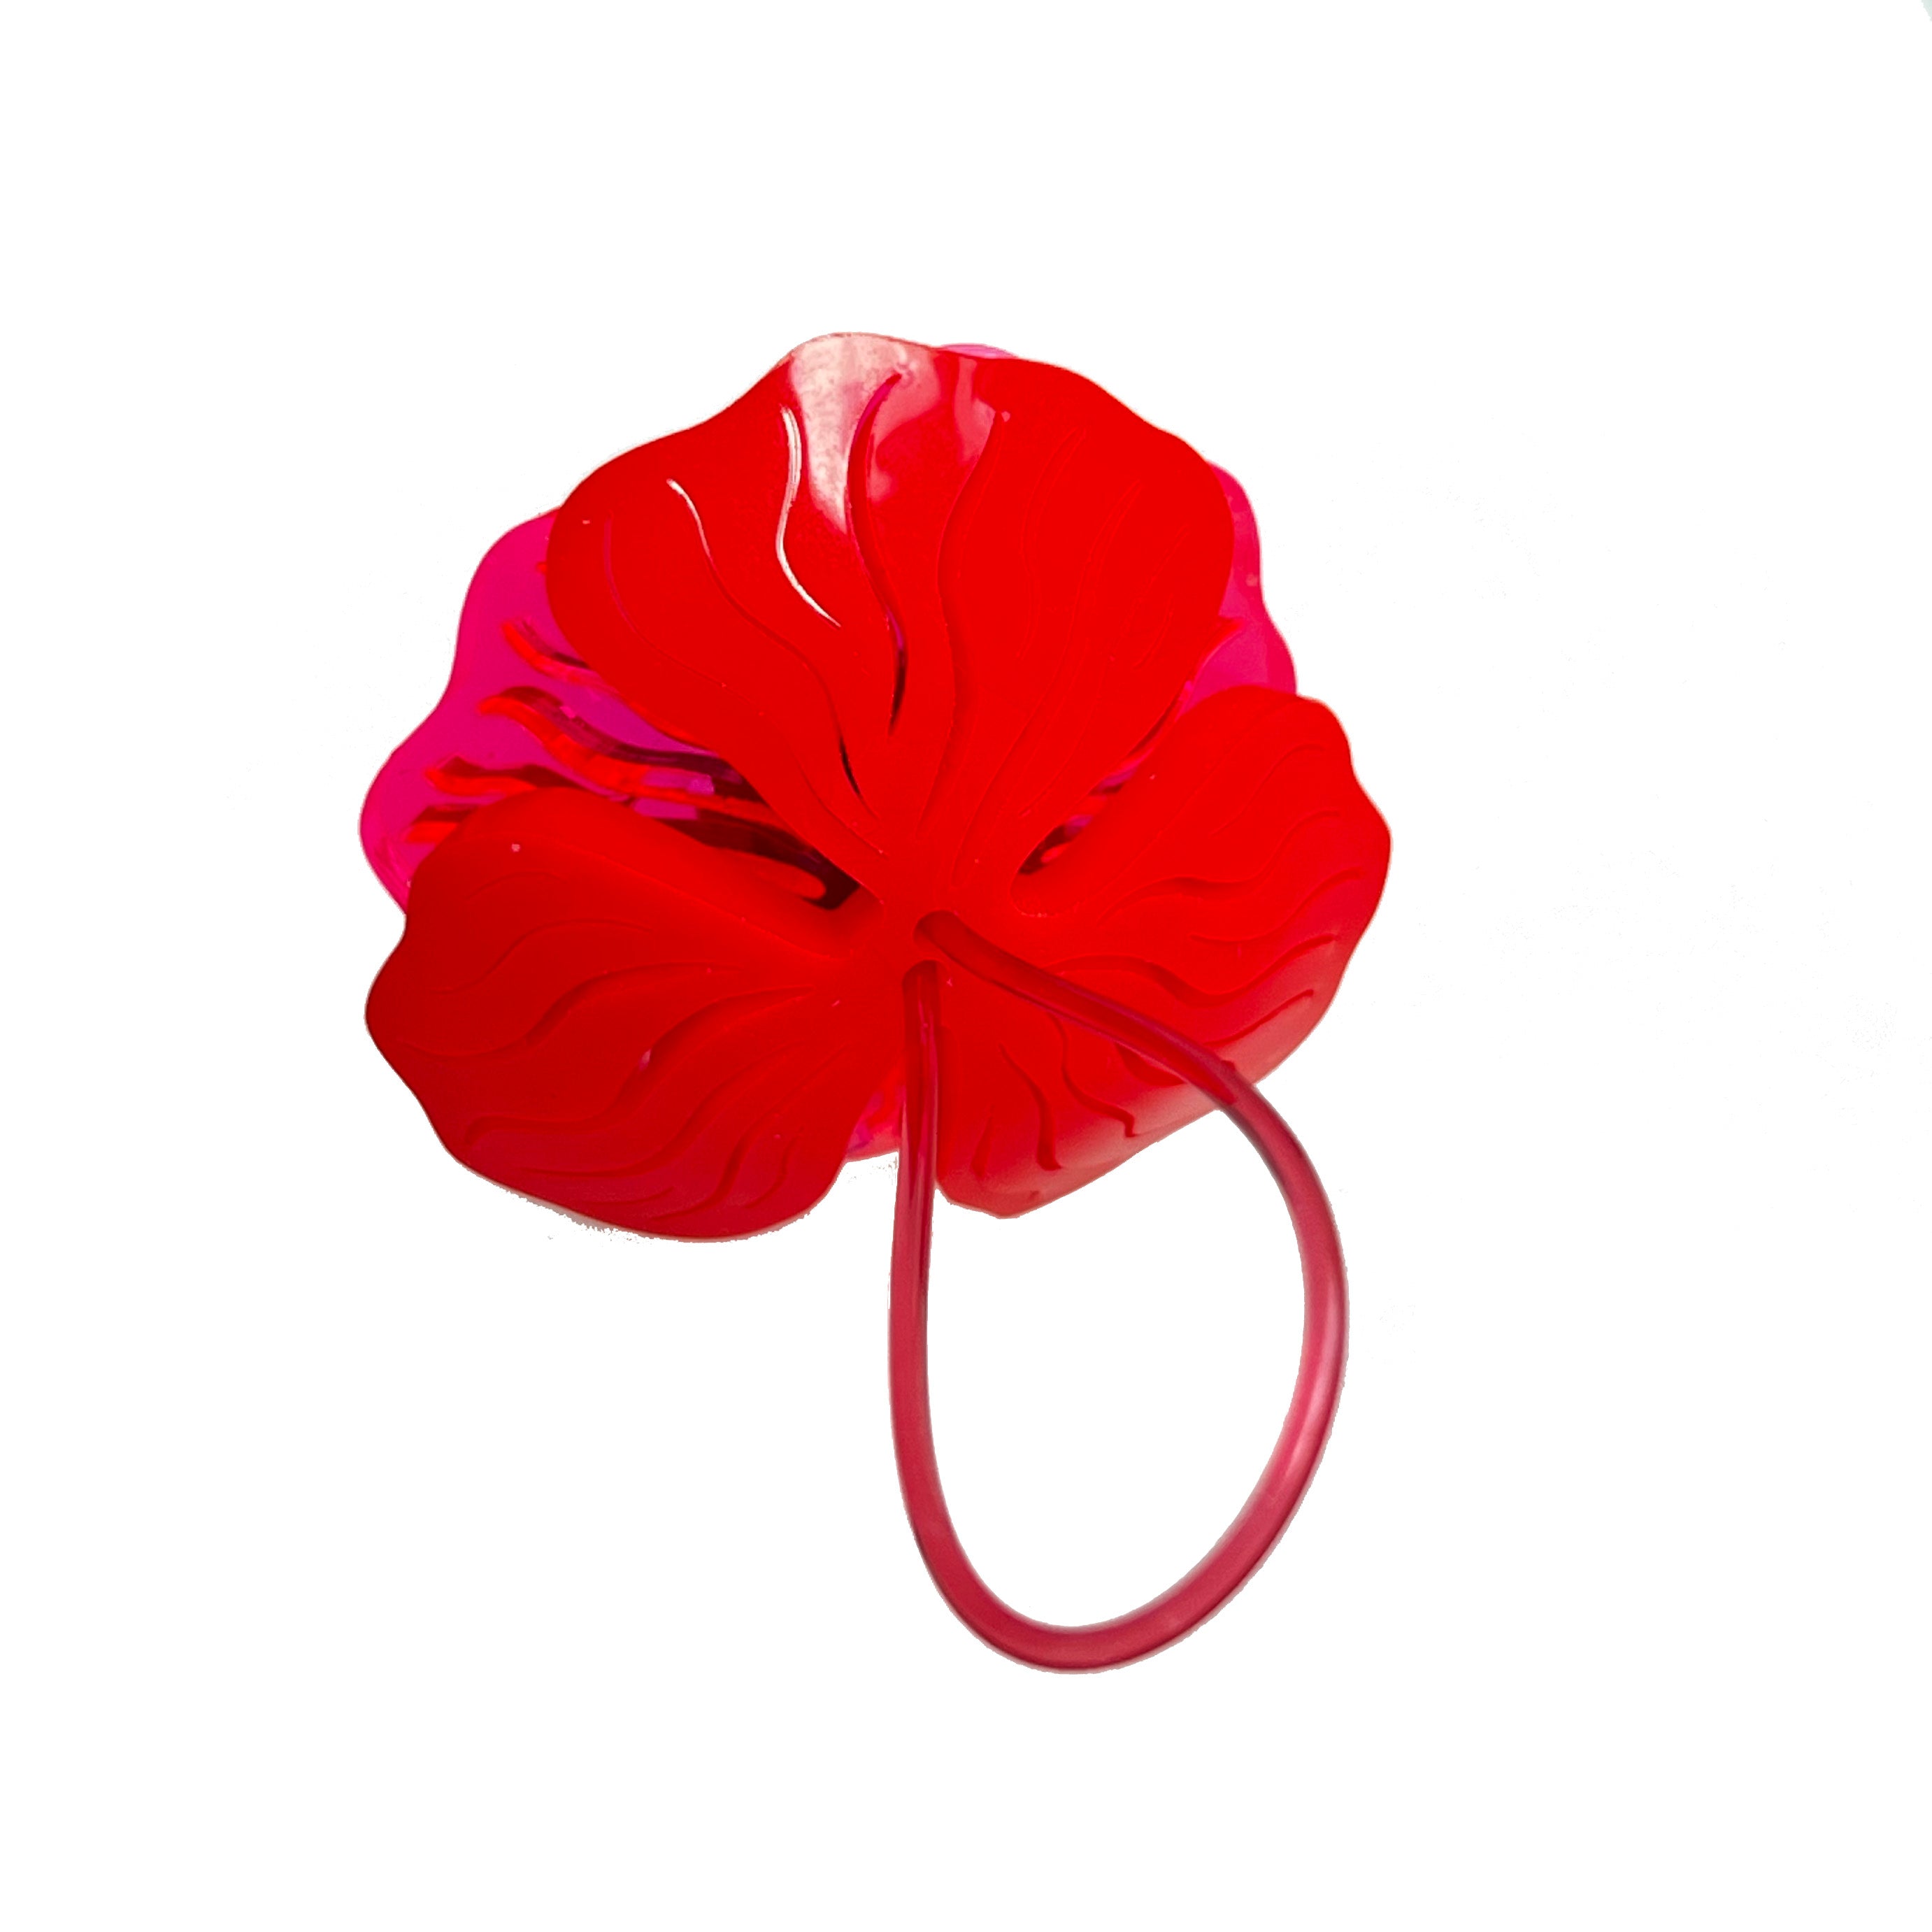 Poppyflower Ring